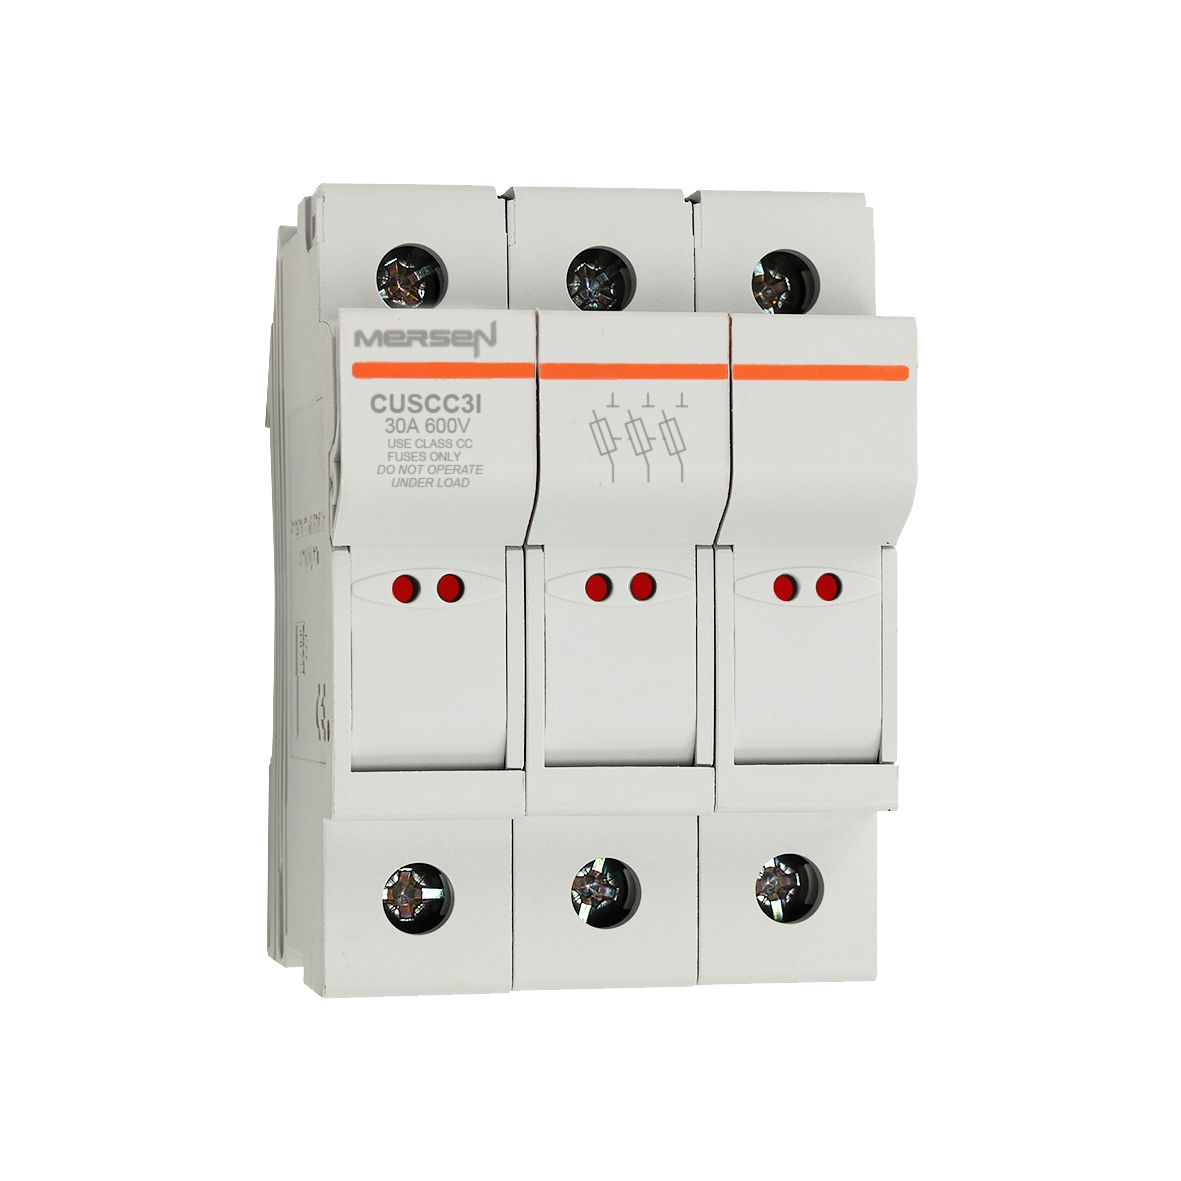 H1062791 - modular fuse holder, UL, 3P, Class CC, DIN rail mounting, indicators, IP20